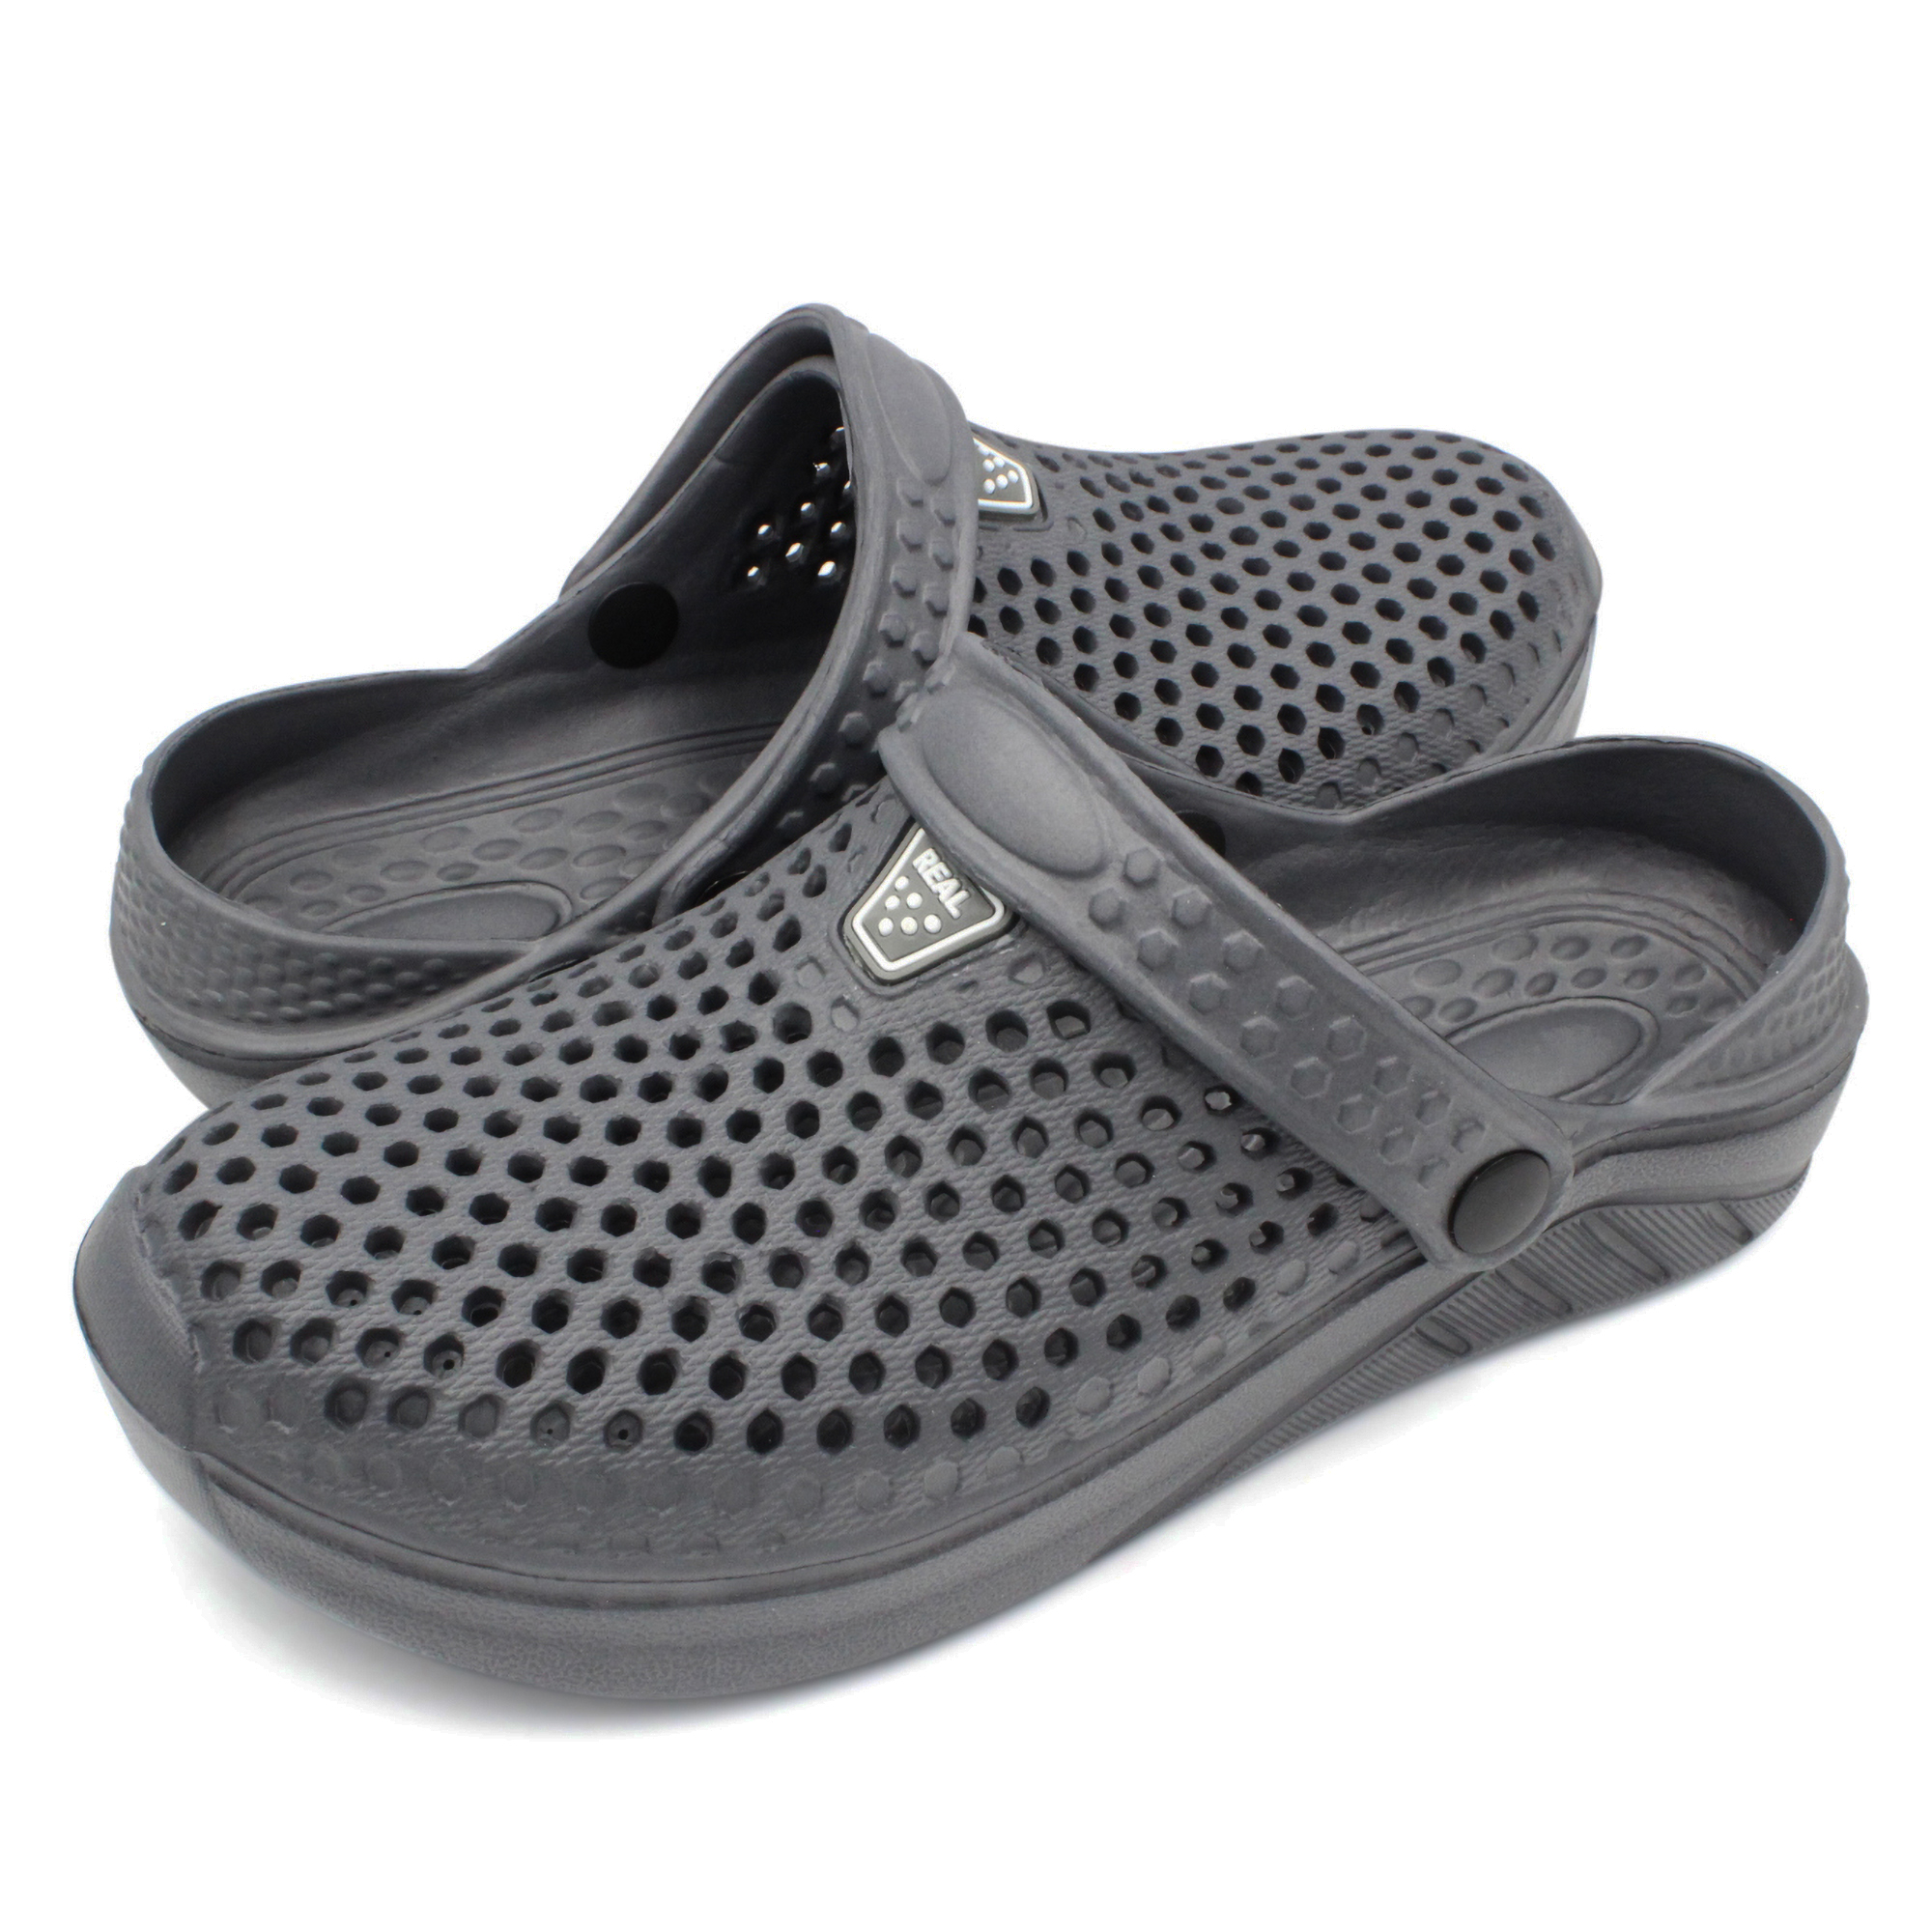 Women's Garden Clogs Nursing Shoes Water Boat Sandals | eBay